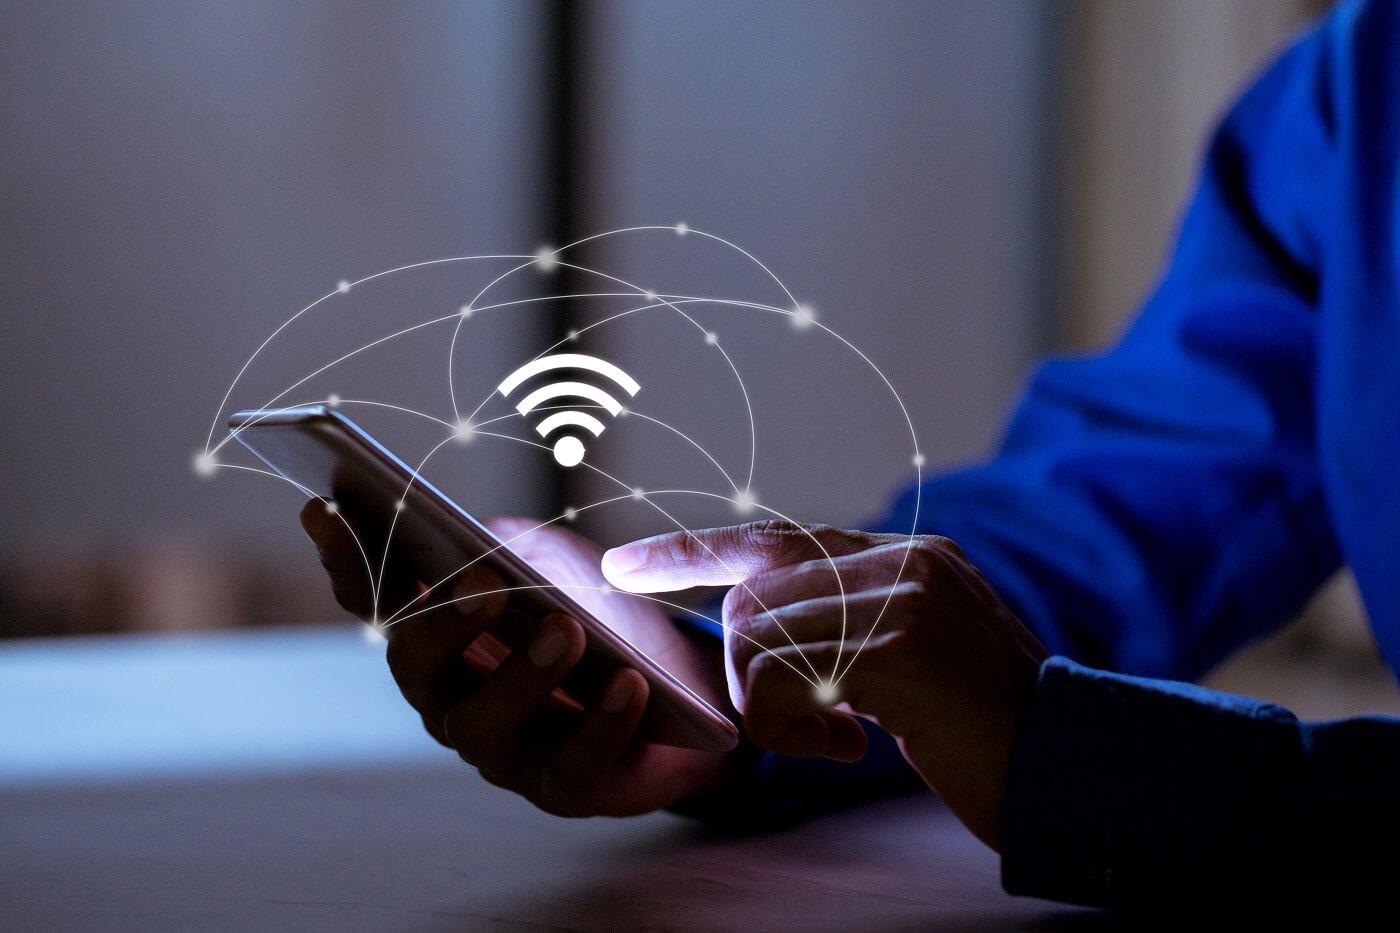 growth of digital transformation with next-gen Wi-Fi 6.0